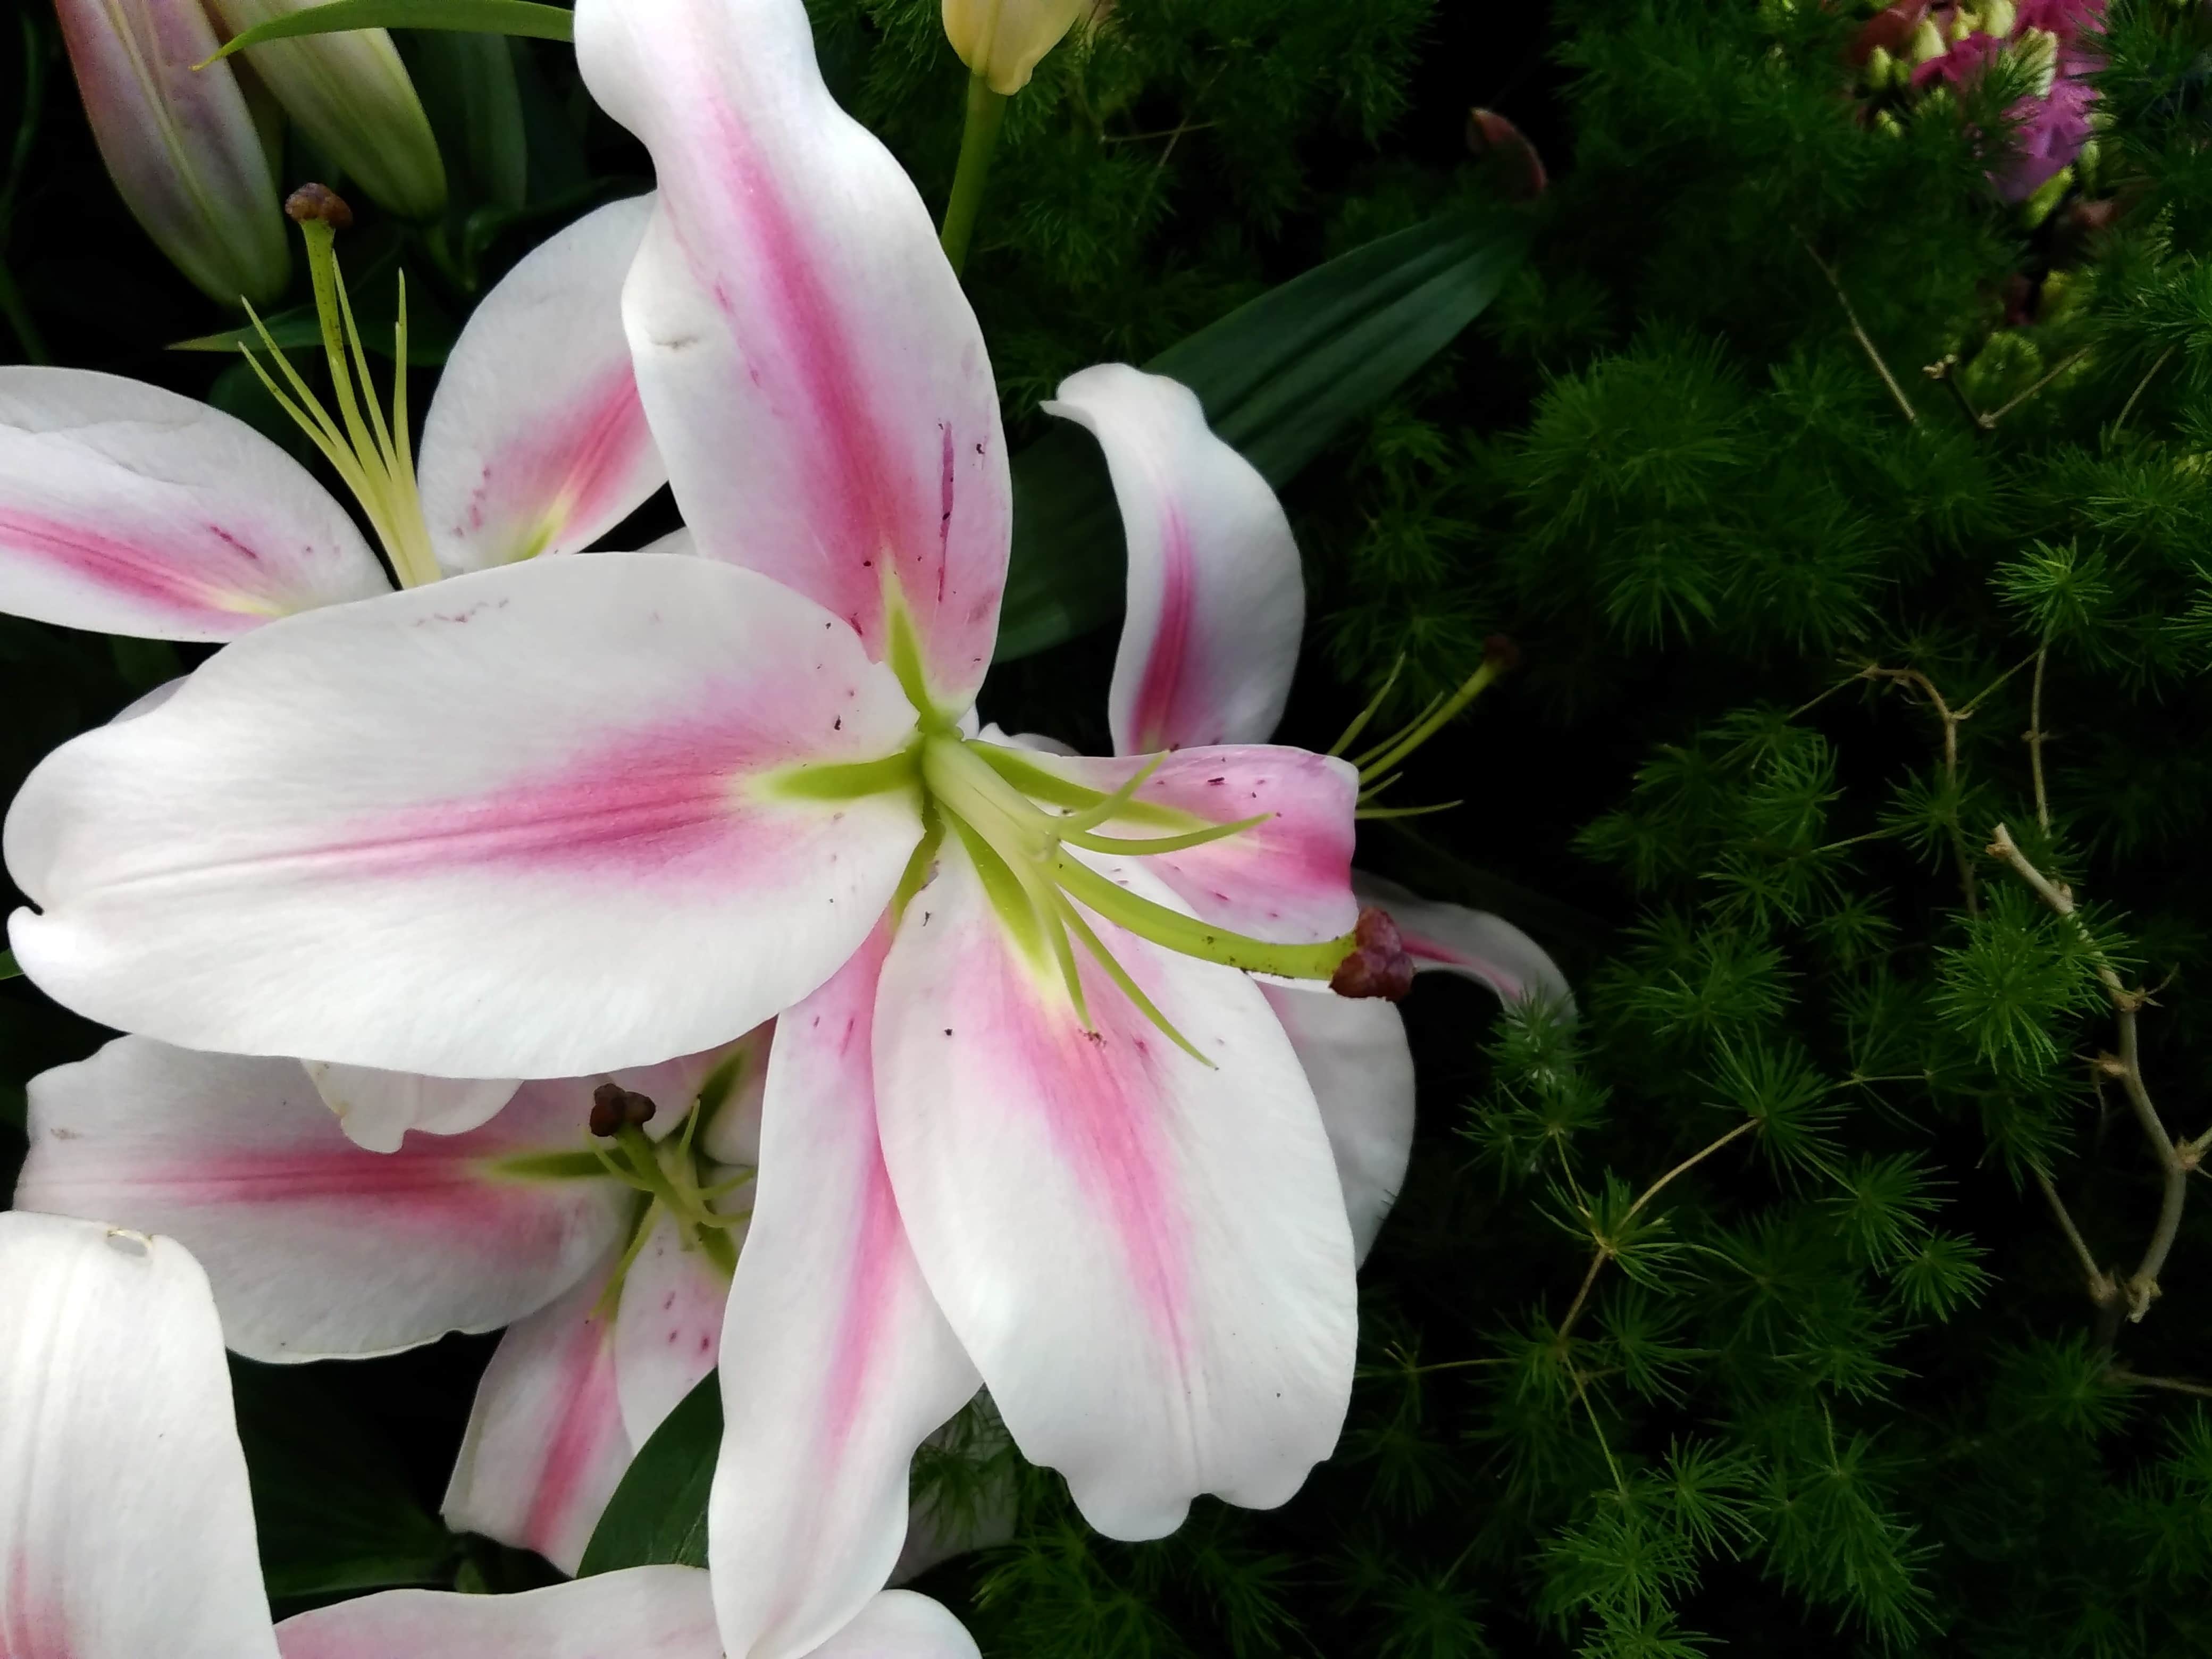 My new flowers. Лилия азиатская Пинк блоссом. "Flower_Lily" webcam.